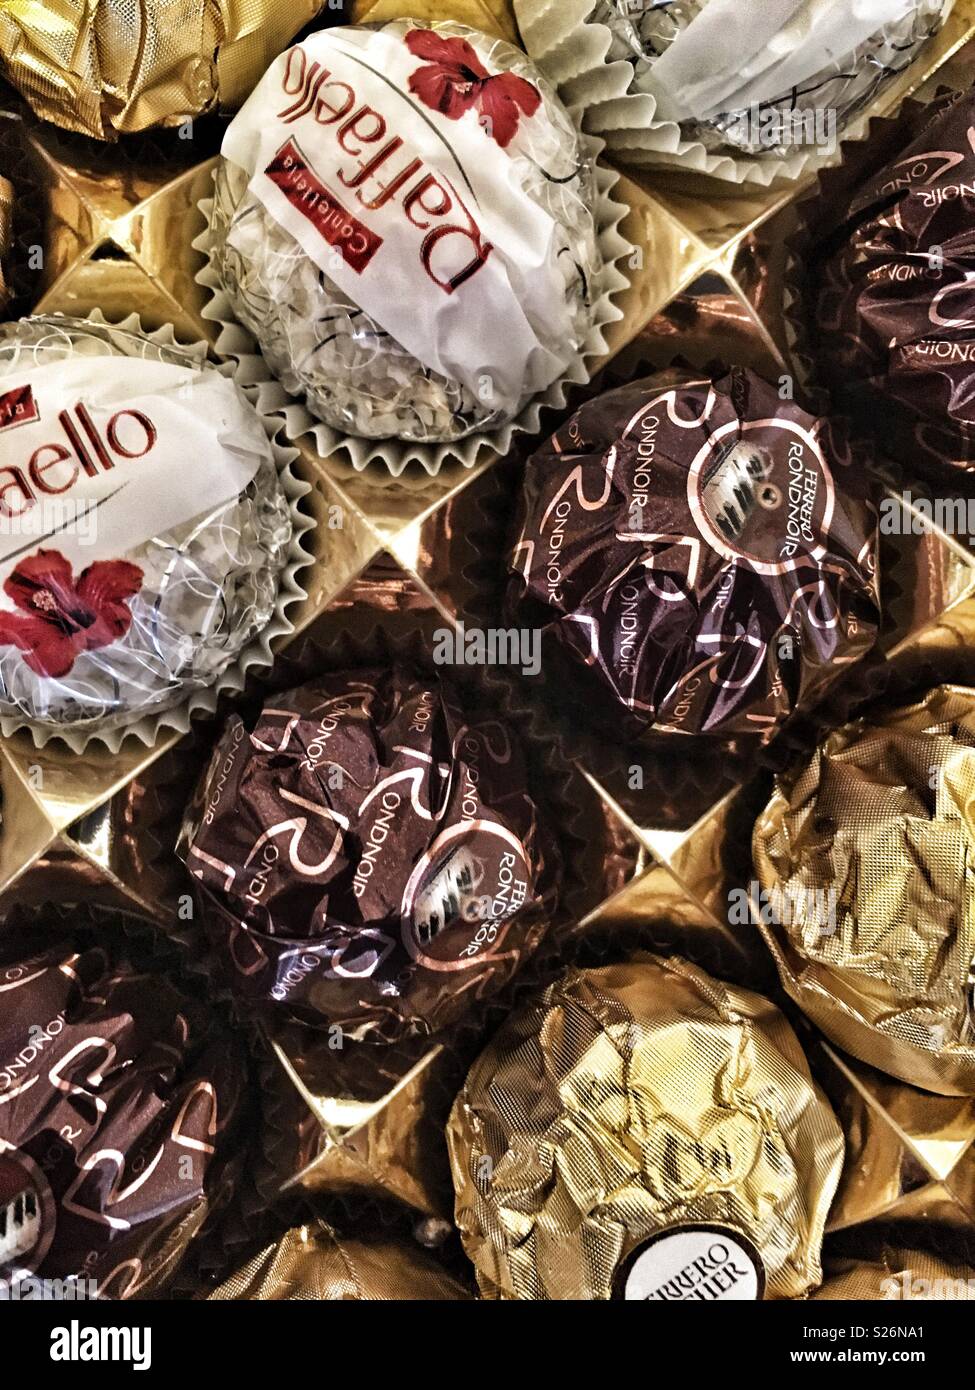 Ferrero Chocolate pralines collection box with Raffaello, Ferrero Rocher  and Rond noirs Stock Photo - Alamy